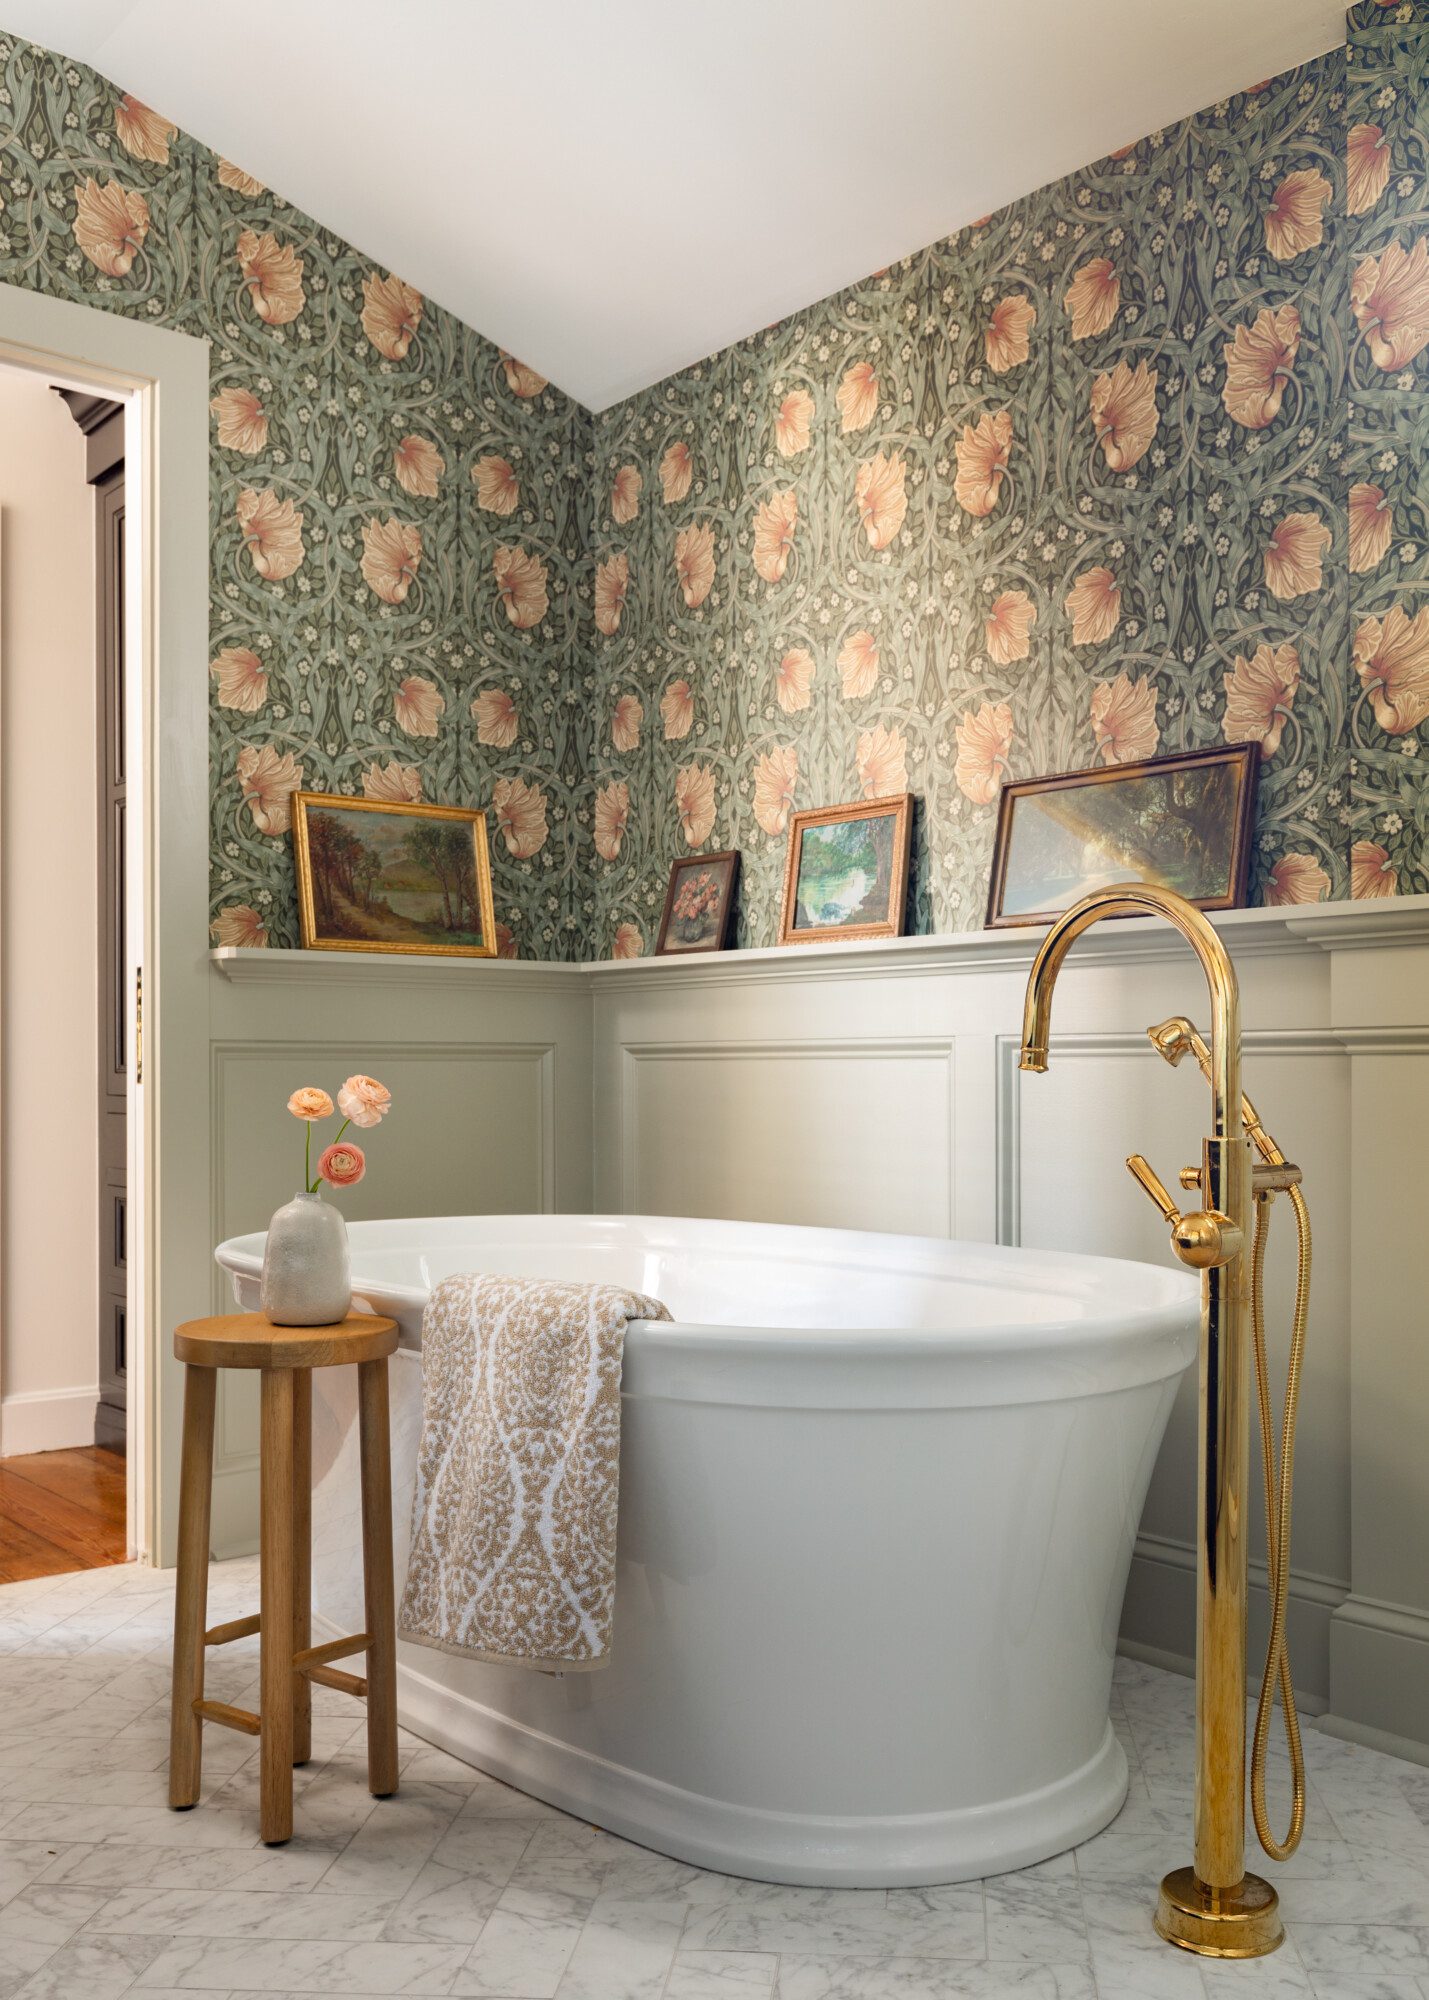 Bathroom with flower pattern wallpaper